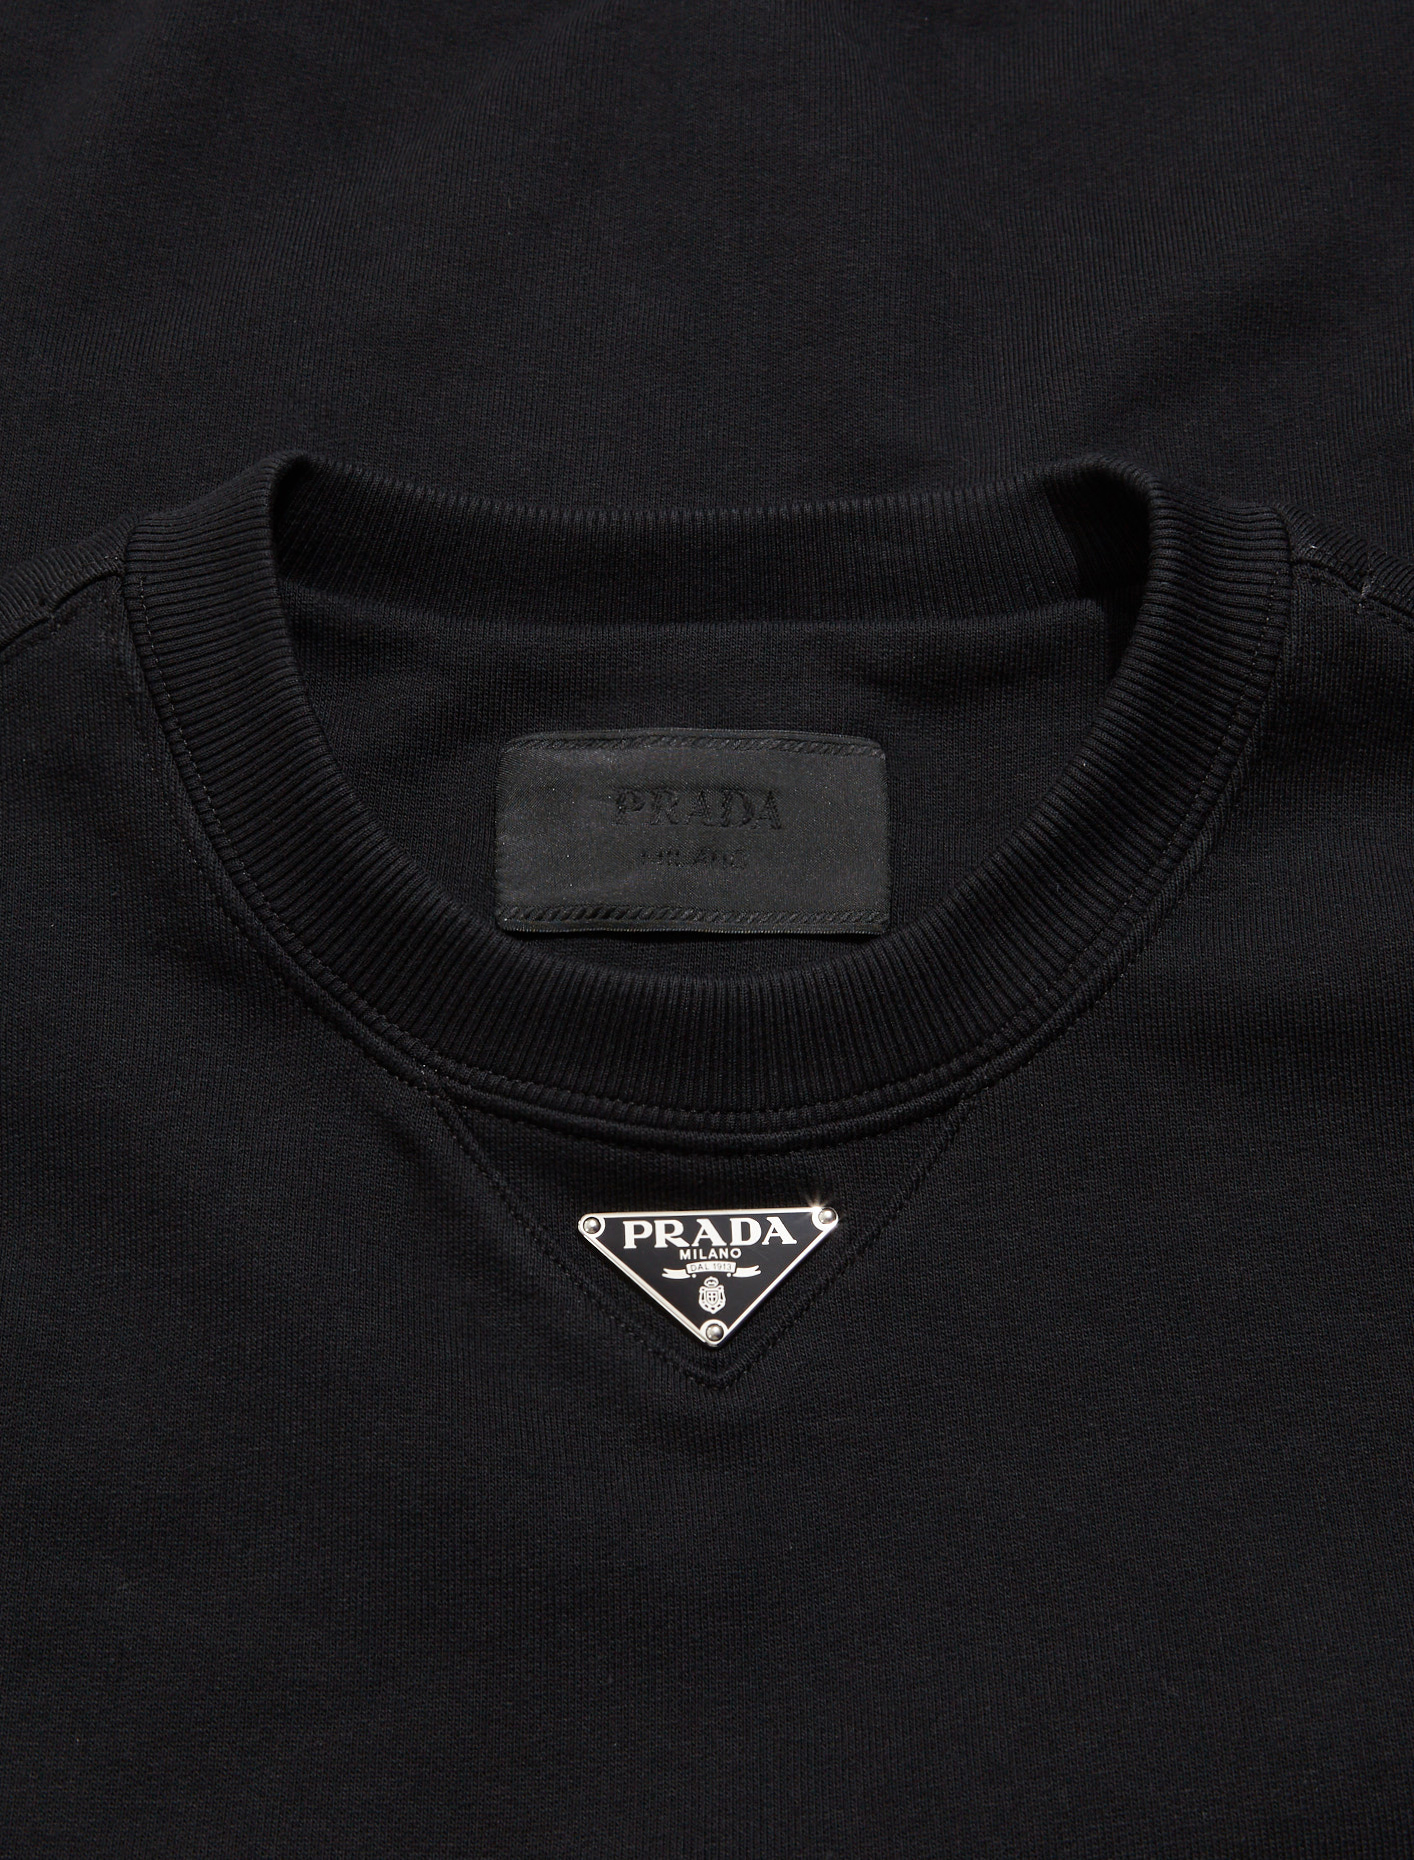 Prada Sweatshirt in Black | Voo Store Berlin | Worldwide Shipping